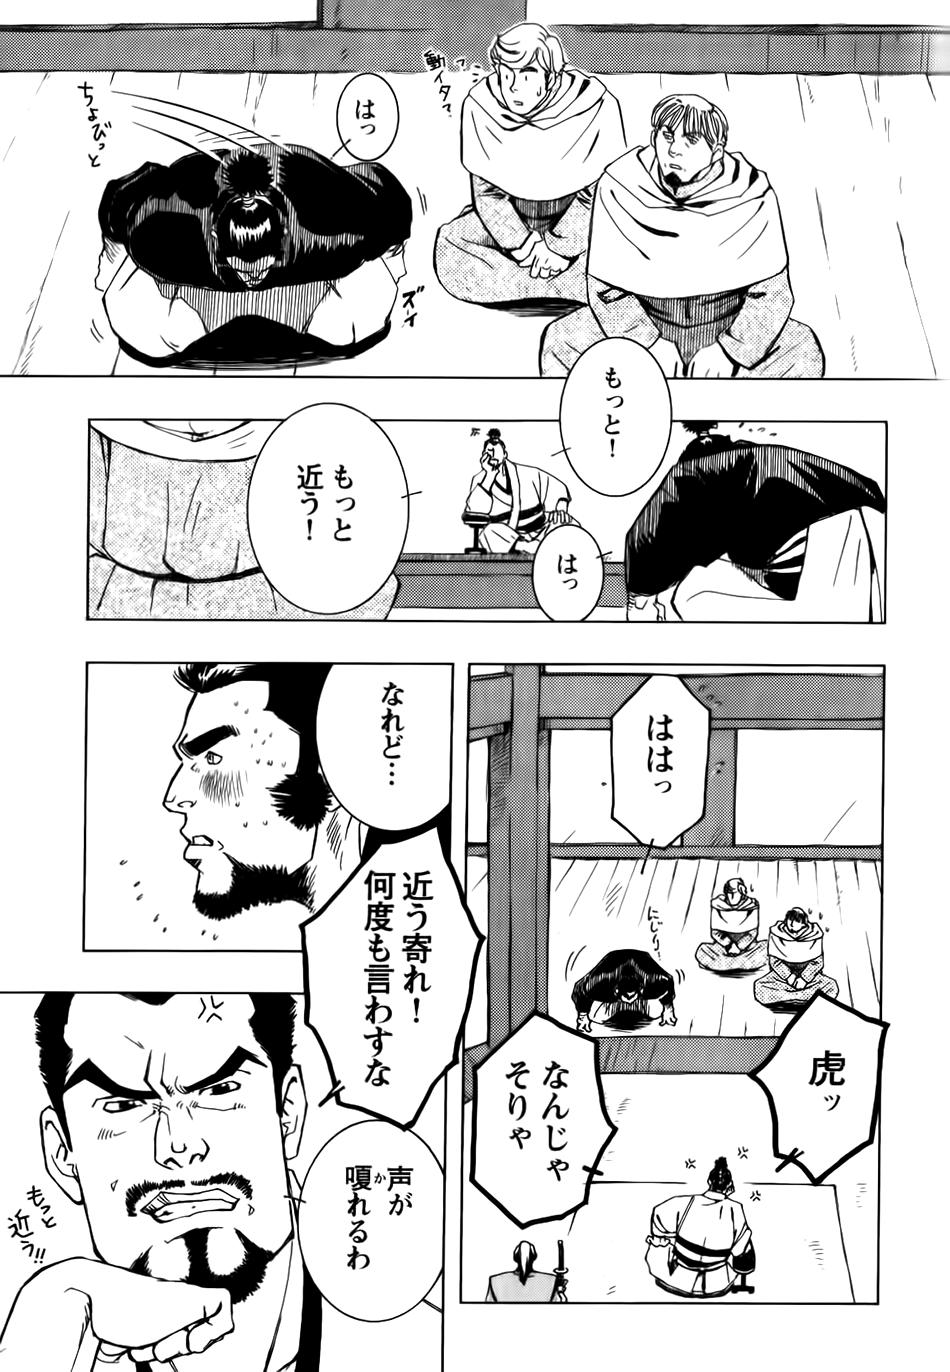 Aunty Nobunaga's lotion man 1080p - Page 3